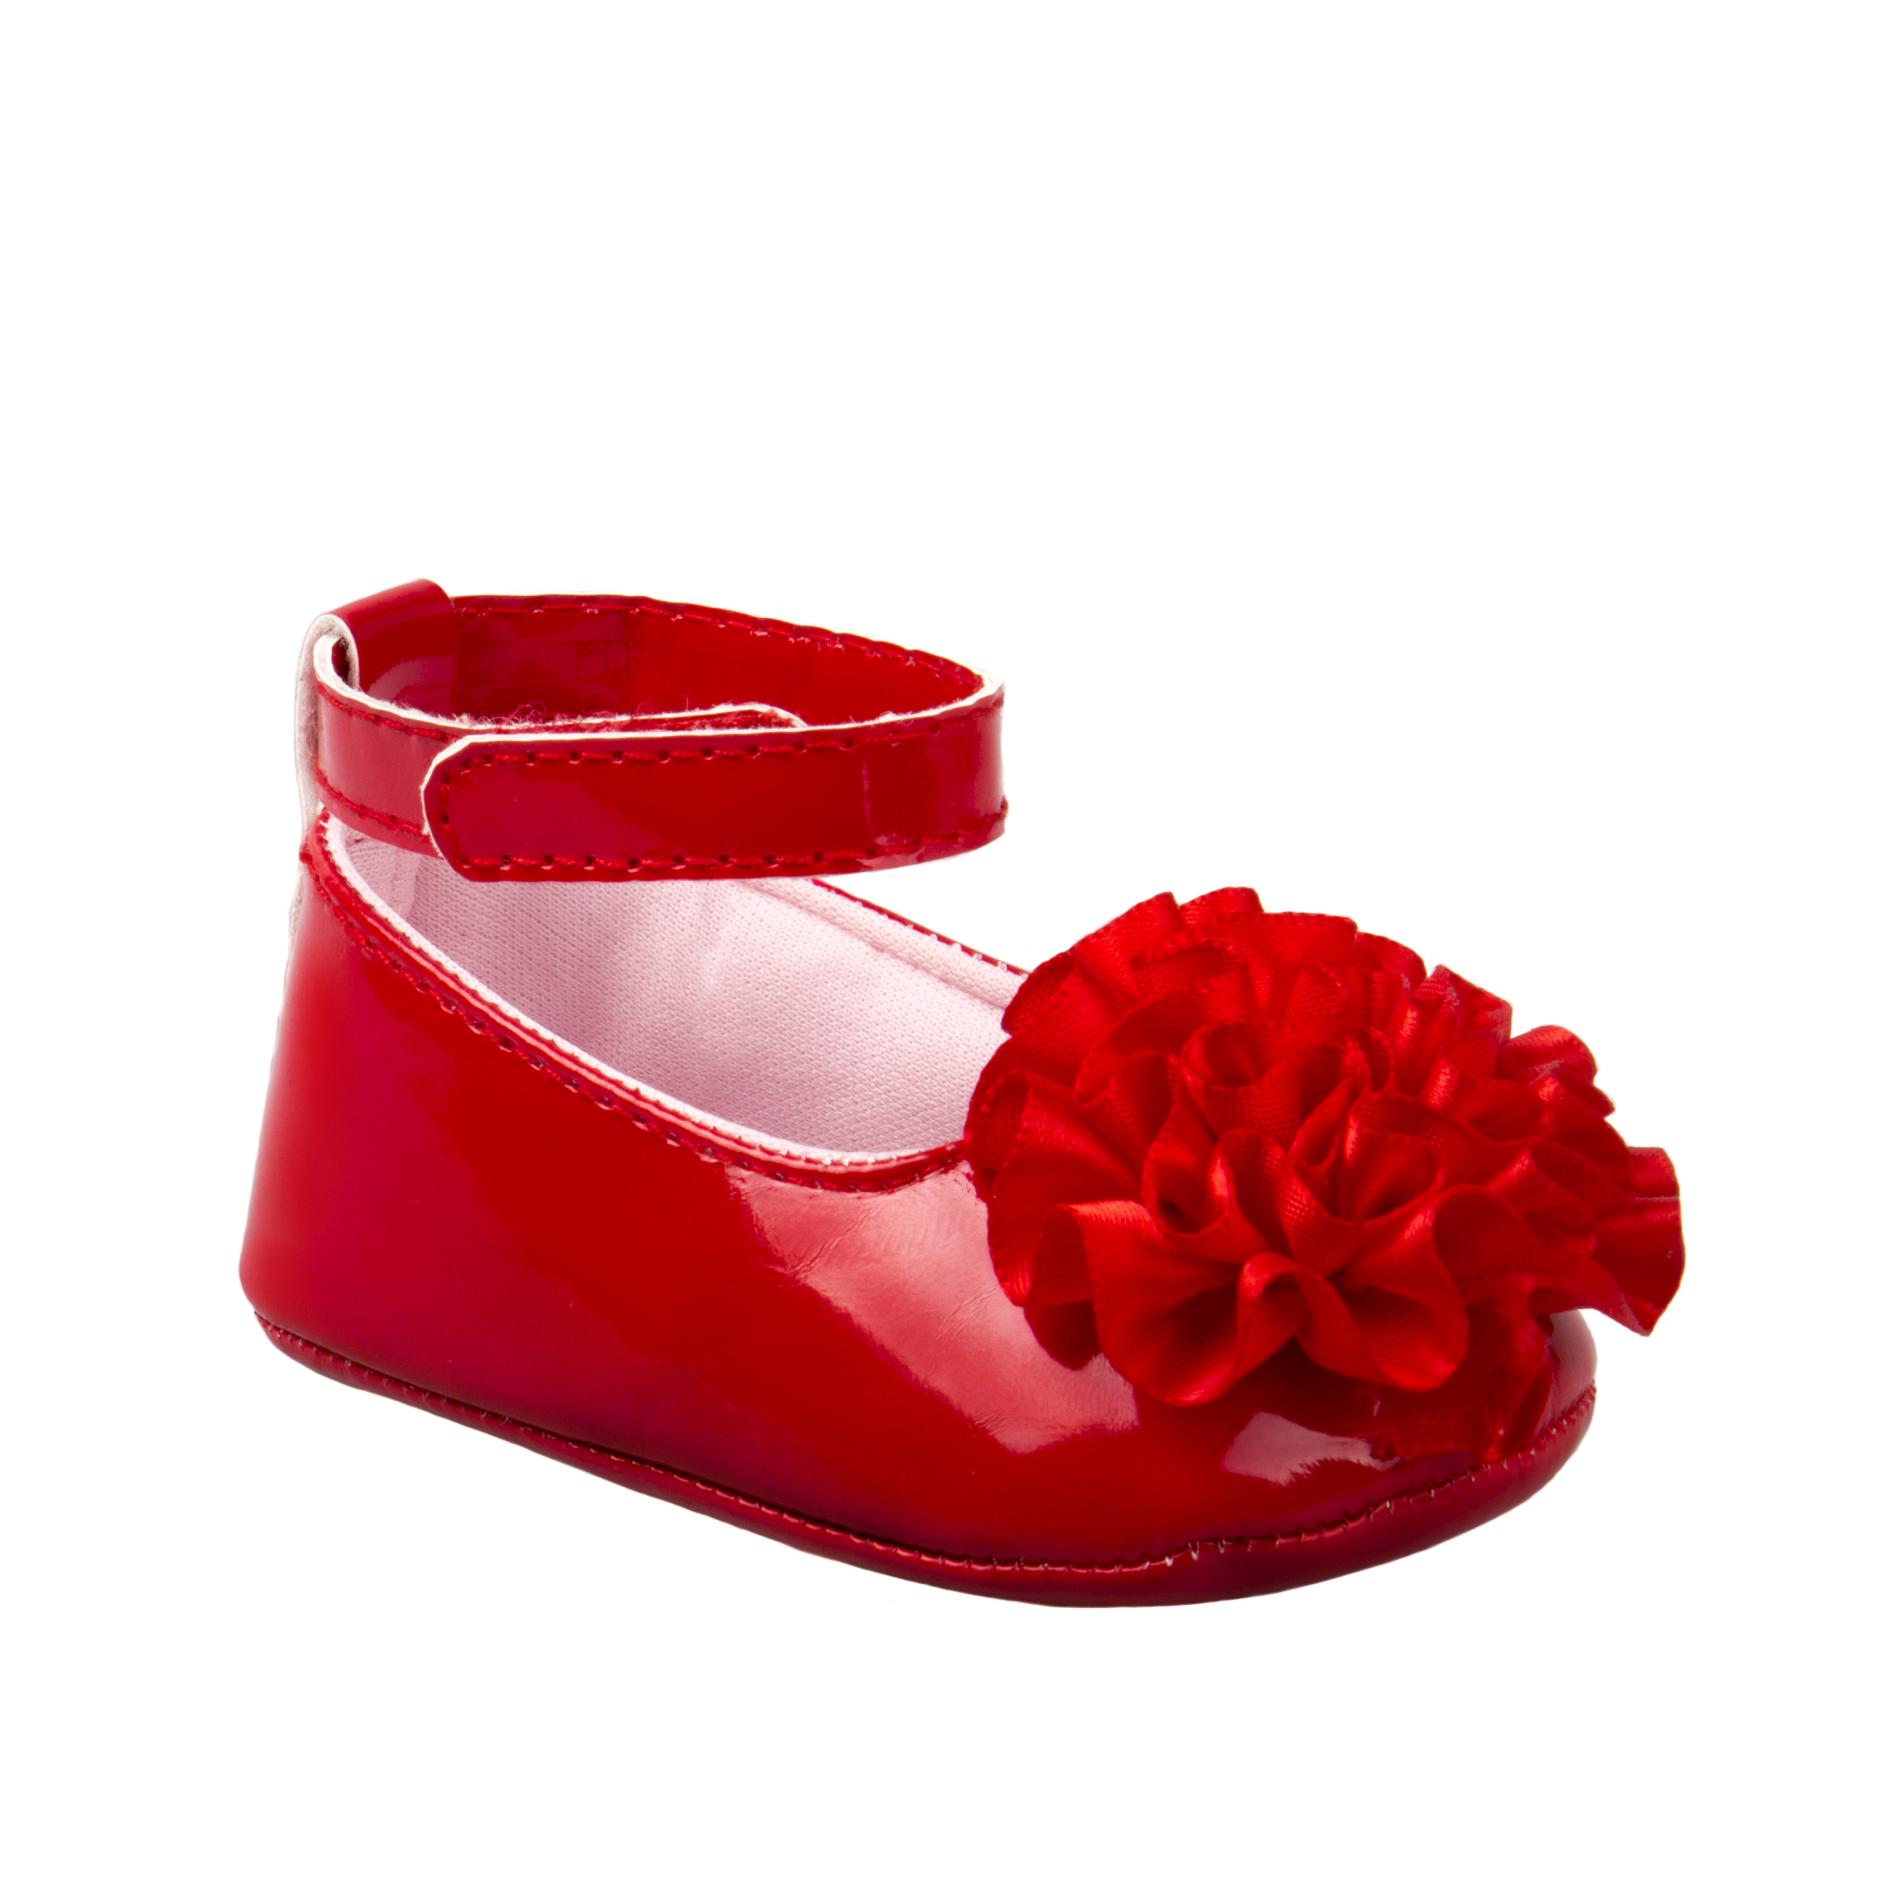 Laura Ashley Baby Girls' Dress Shoe - Red